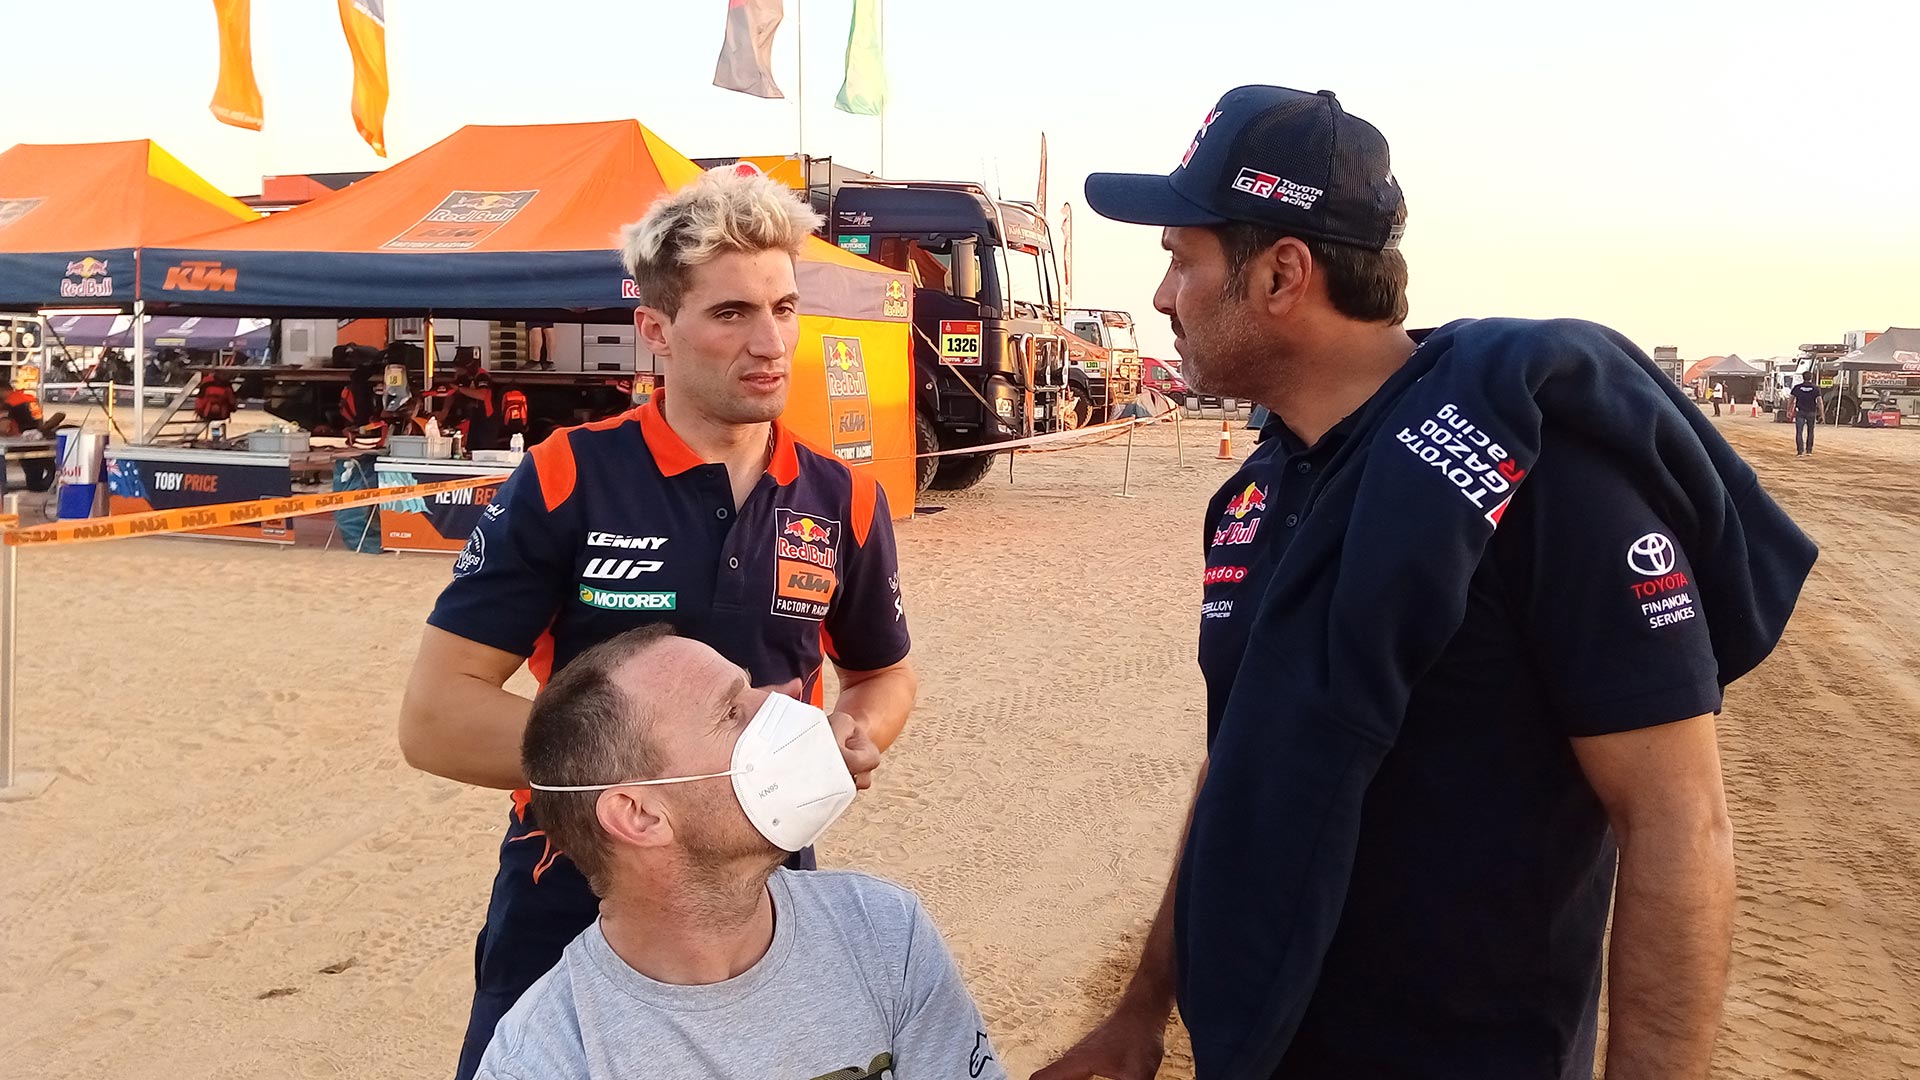 Junto a Kevin Benavides, el argentino que ganó en motos el Rally Dakar en 2021.